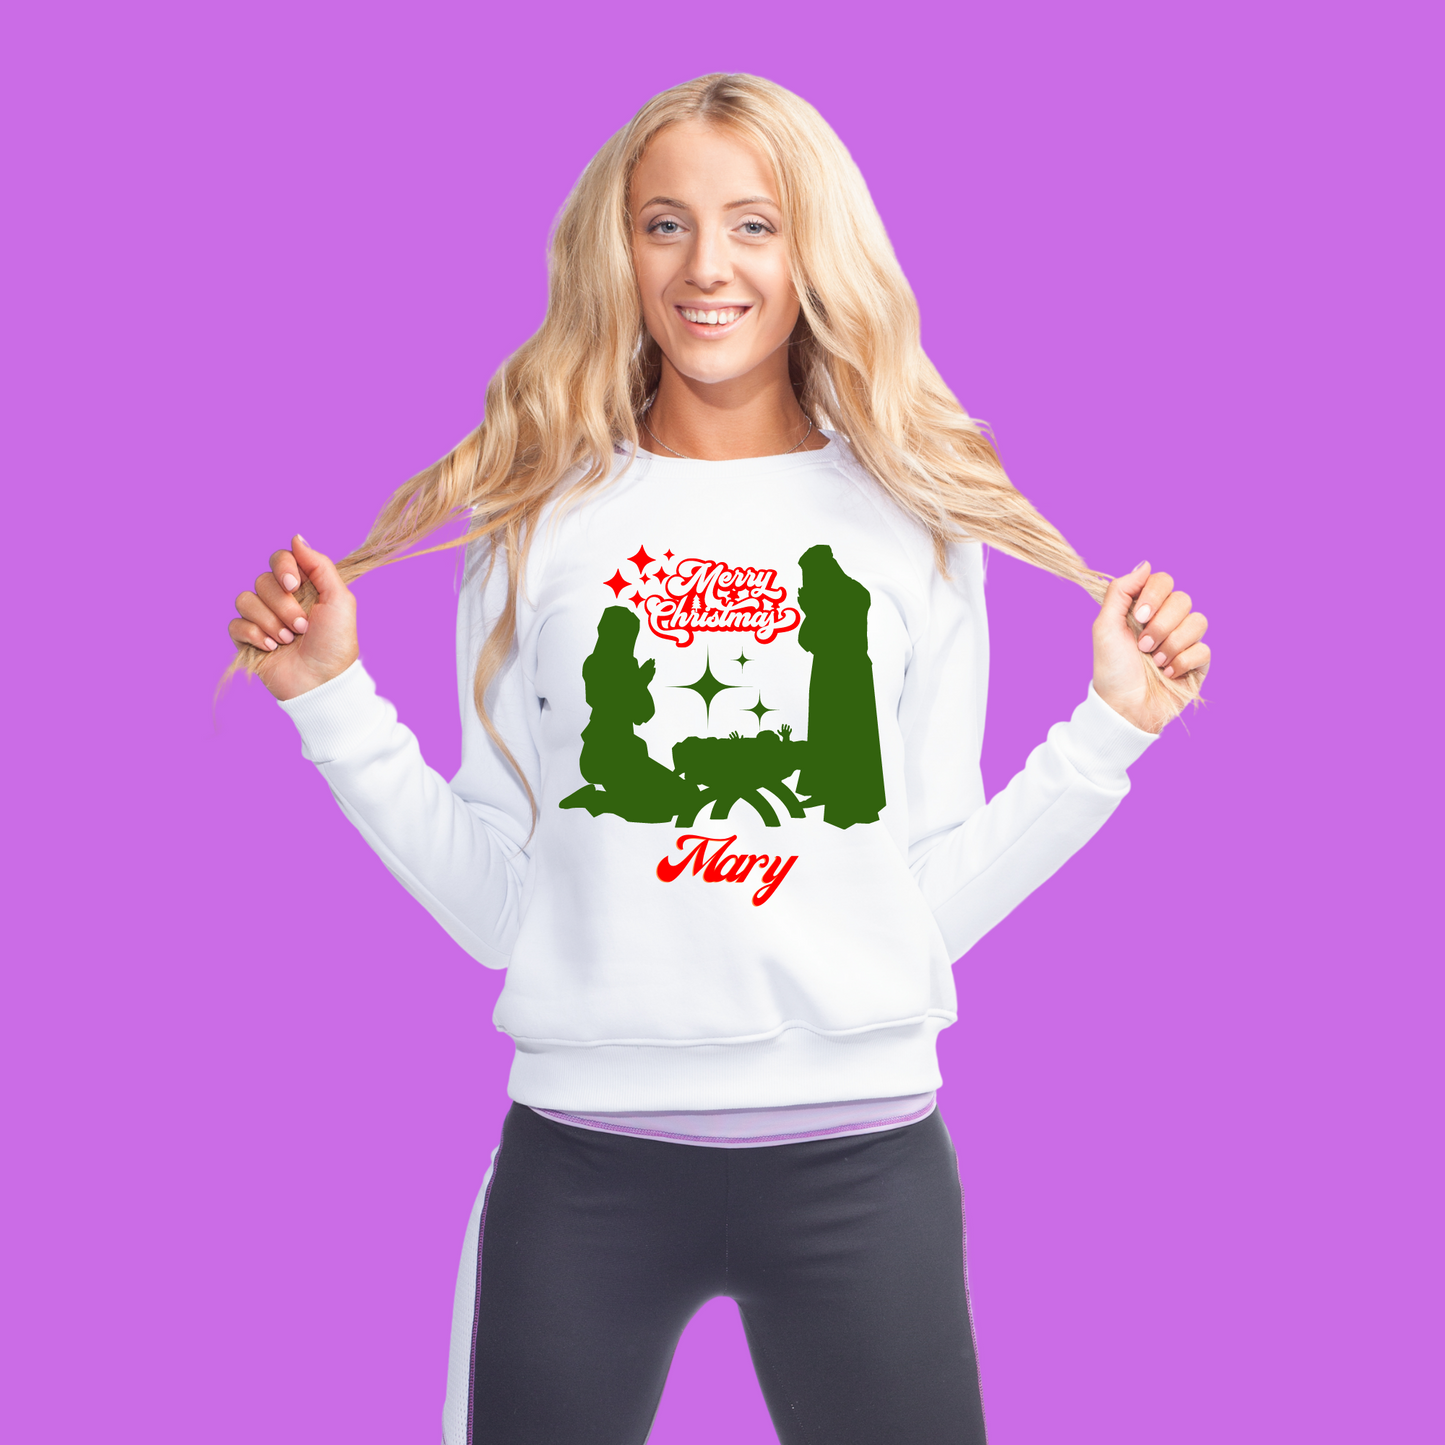 Personalized Christmas Sweater. Nativity Christmas Sweatshirt for Faith Family